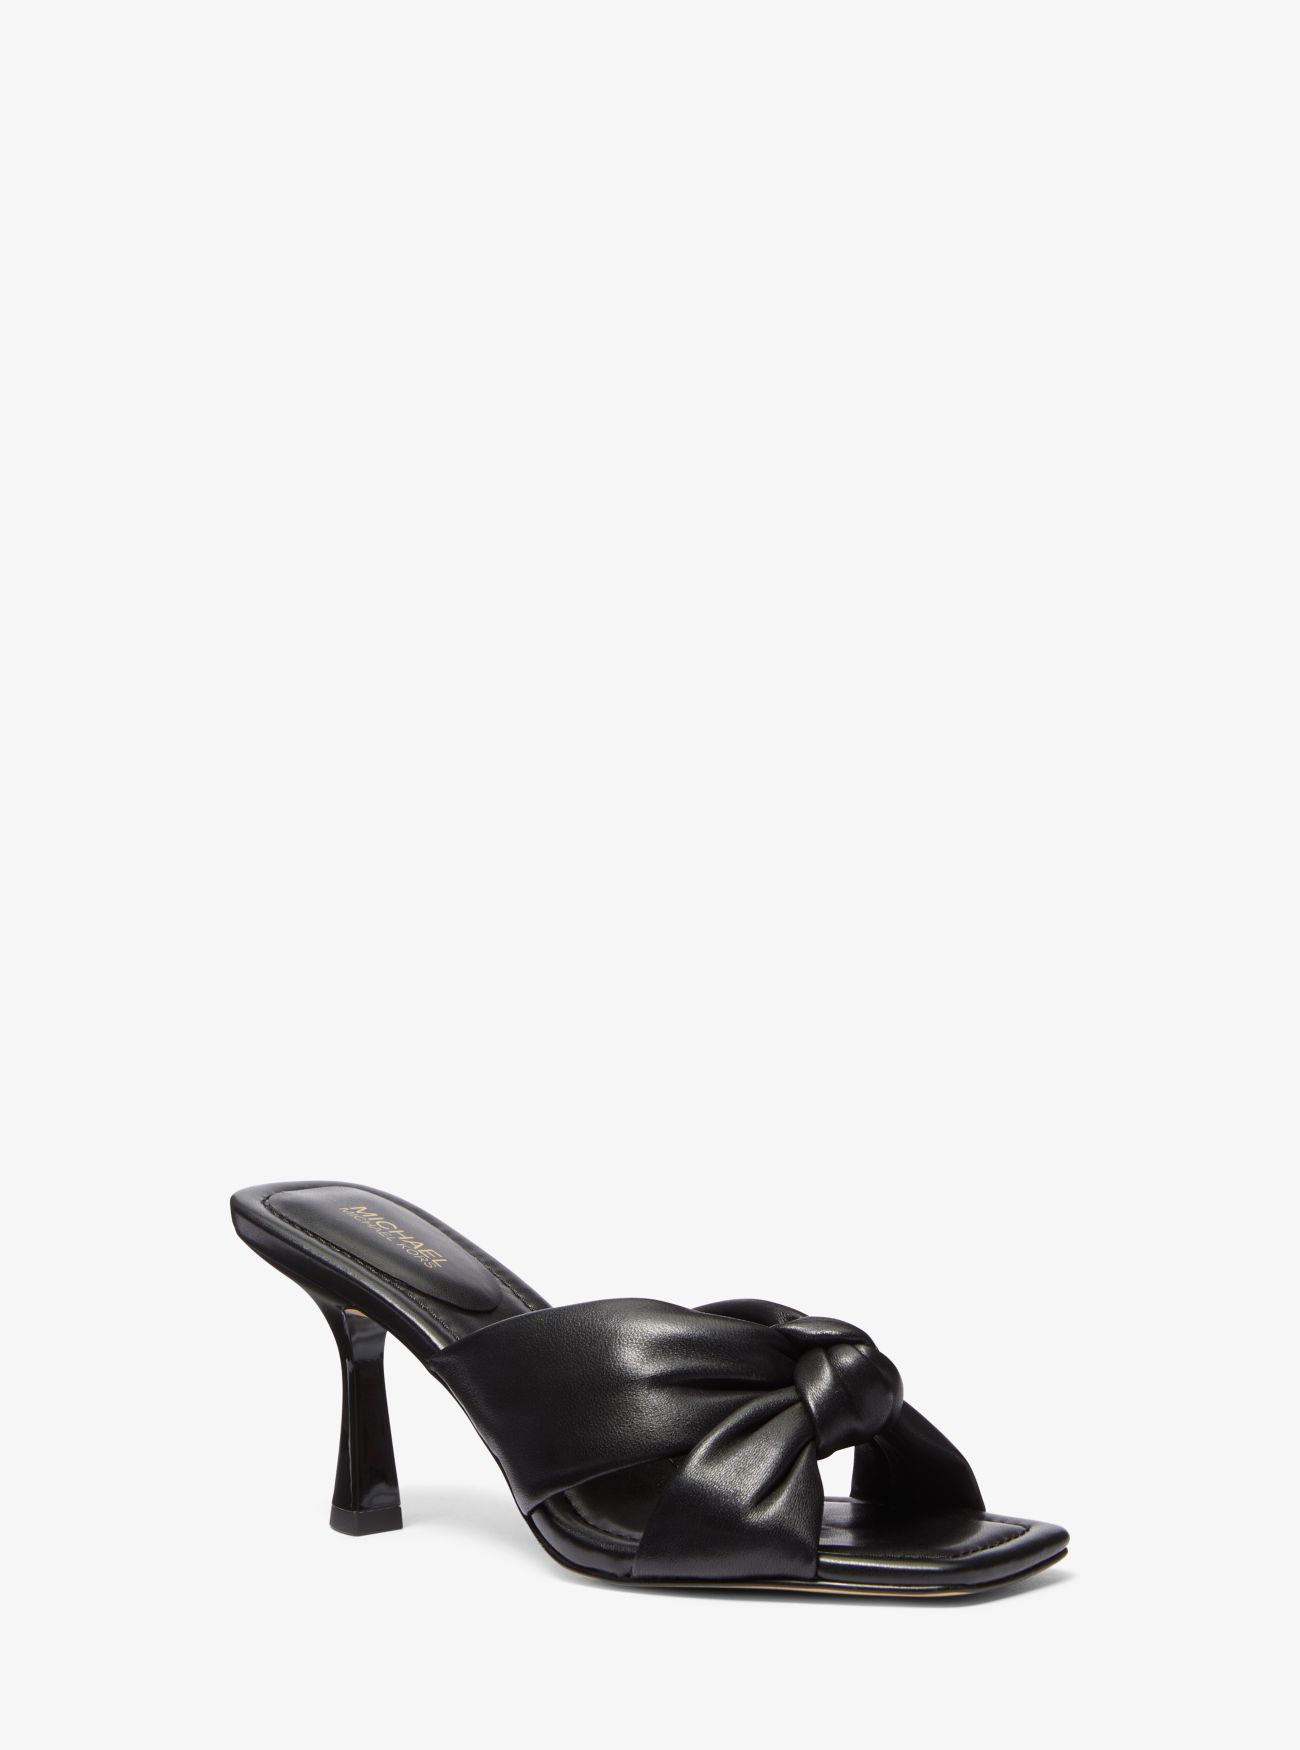 MK Elena Leather Sandal - Black - Michael Kors